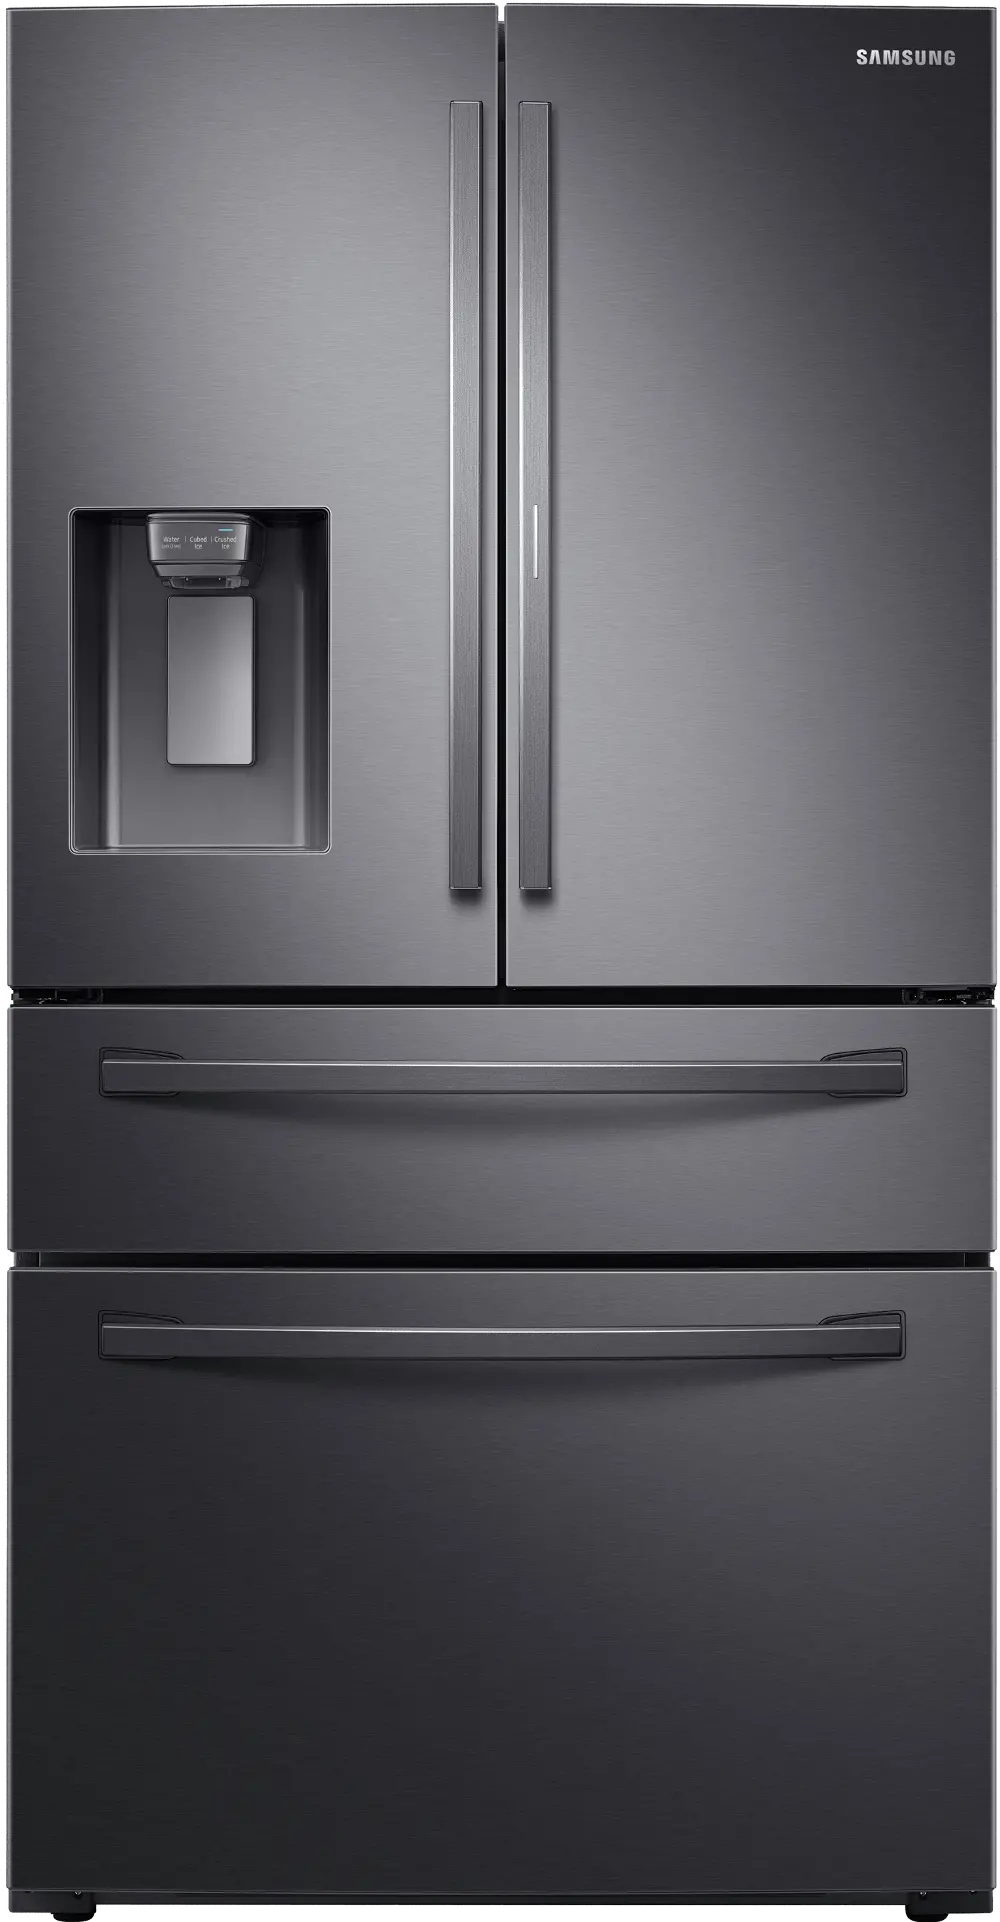 RF28R7351SG Samsung 28.8 cu ft 4 Door Refrigerator - Black Stainless Steel-1